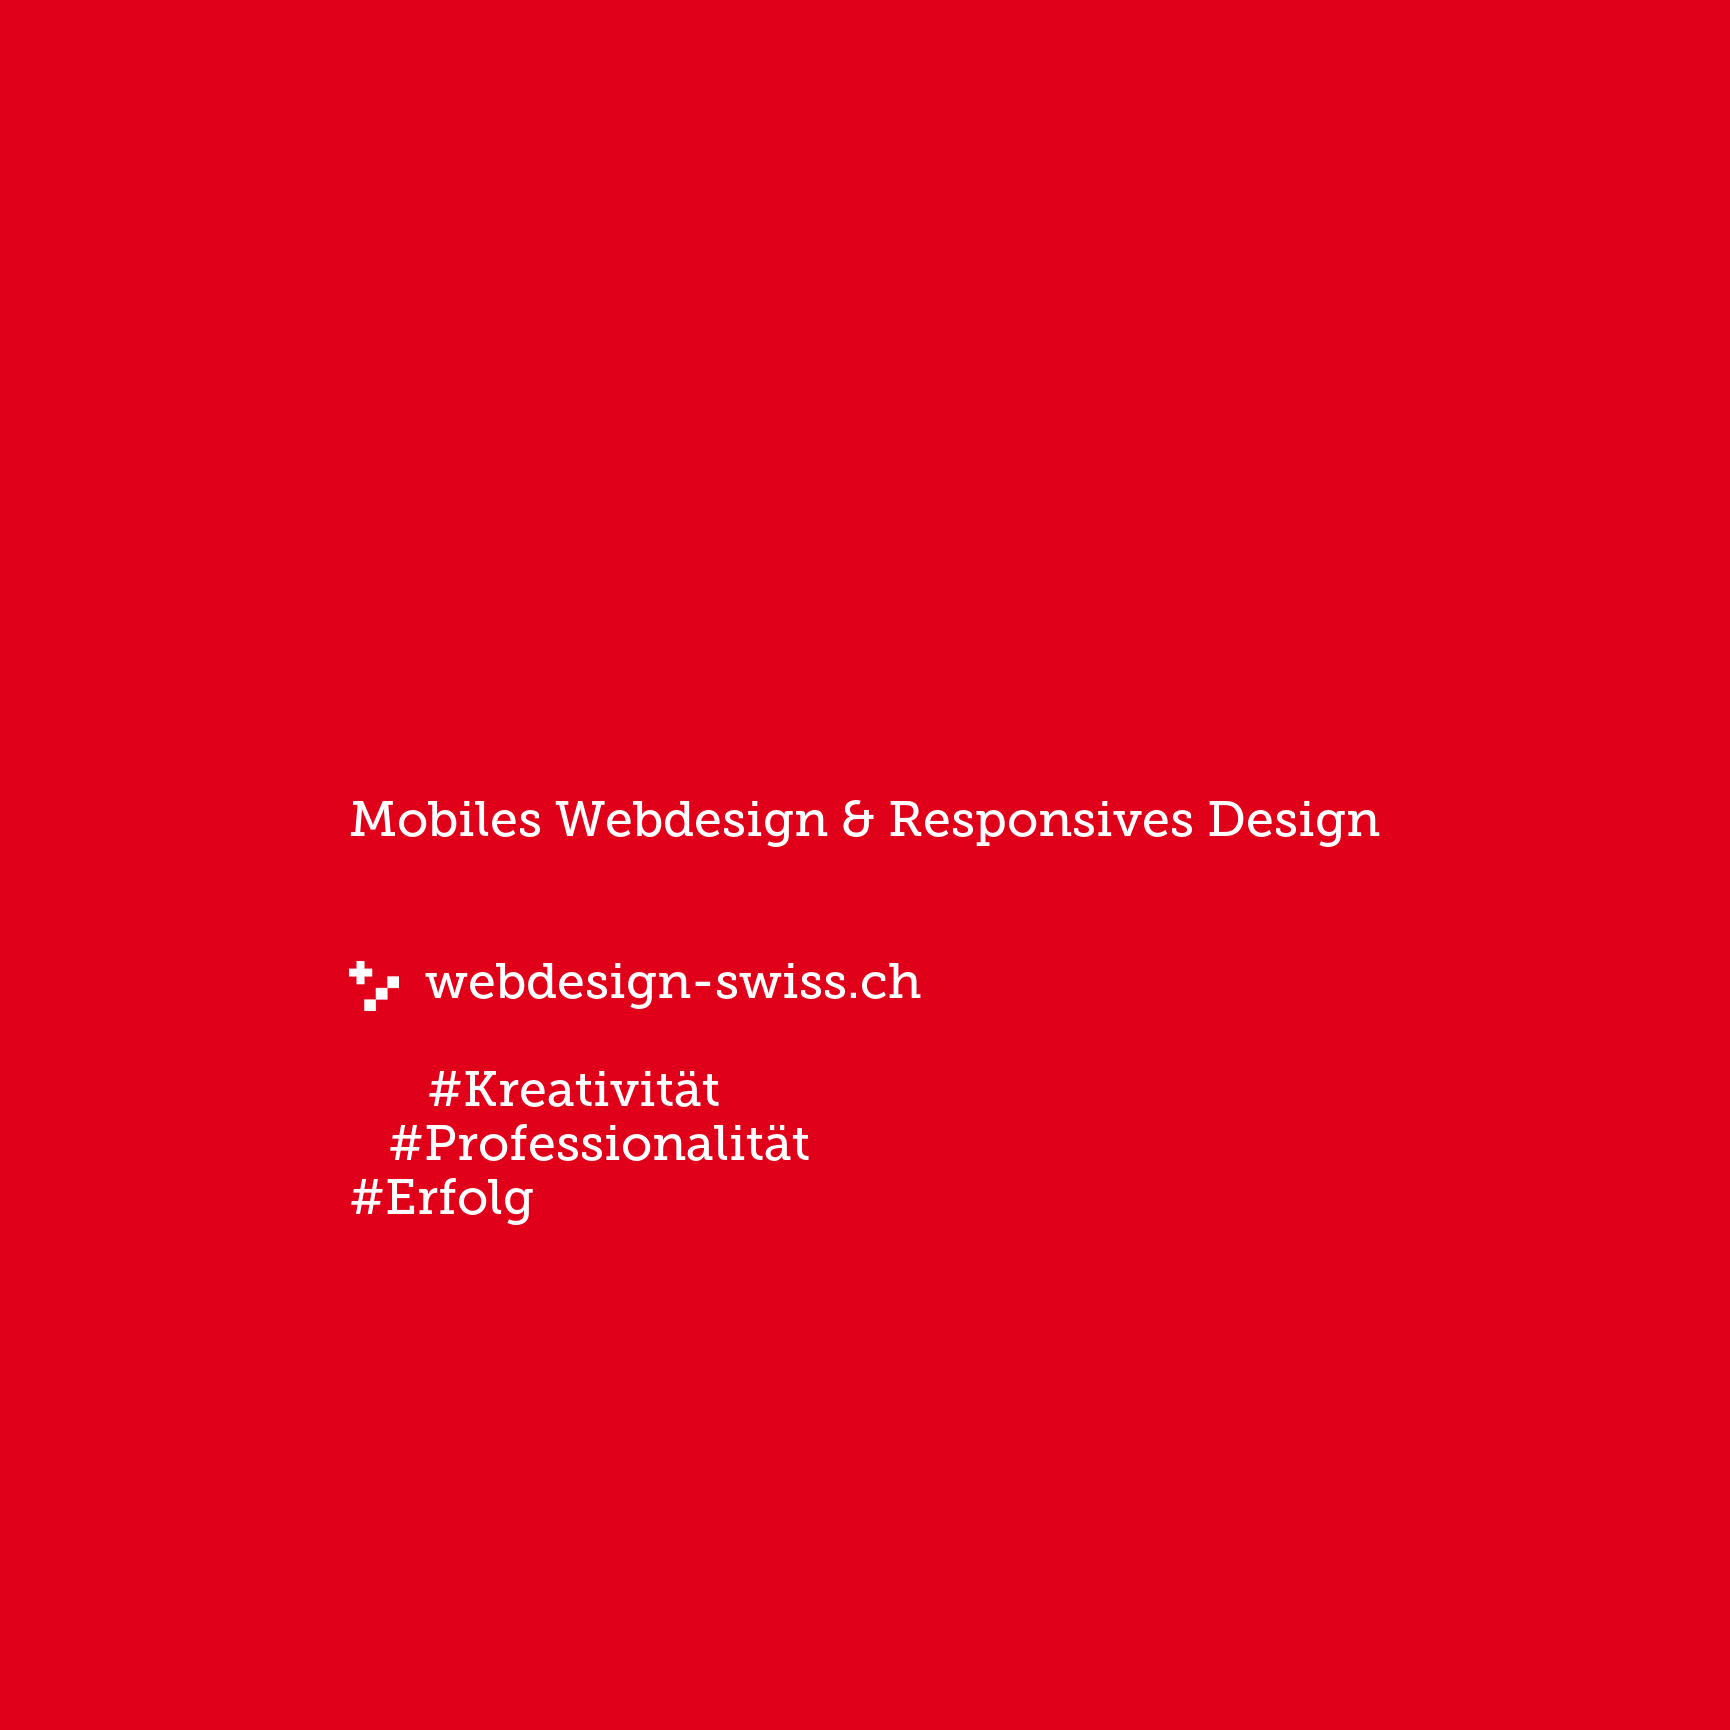 Mobiles Webdesign & Responsives Design